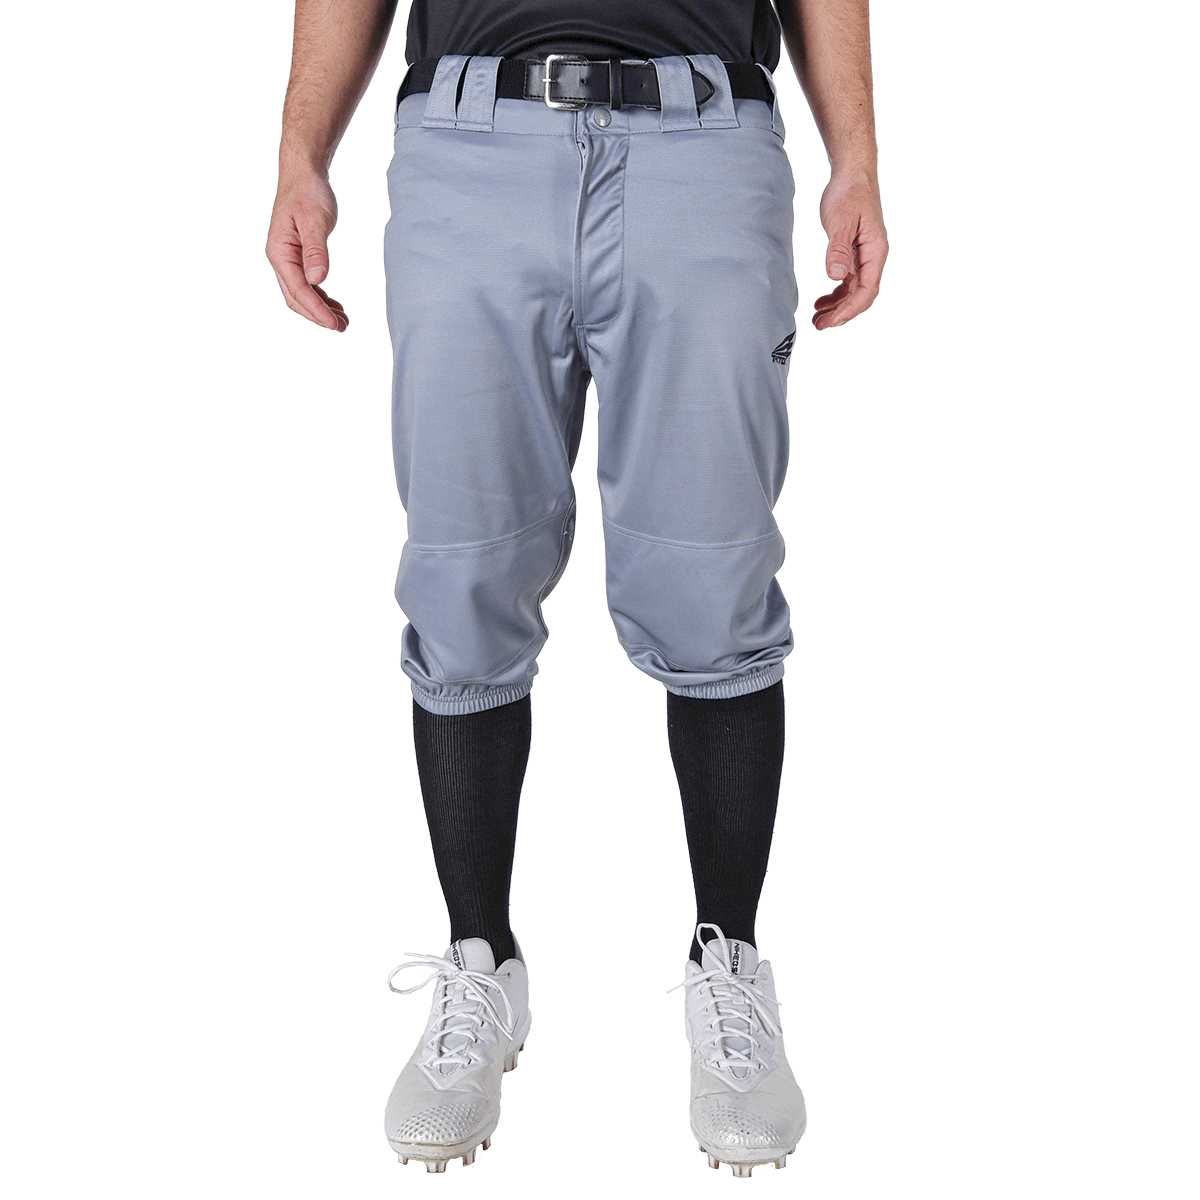 Triton Elite Knicker Baseball Pant (Gray) – Triton Swag Shop